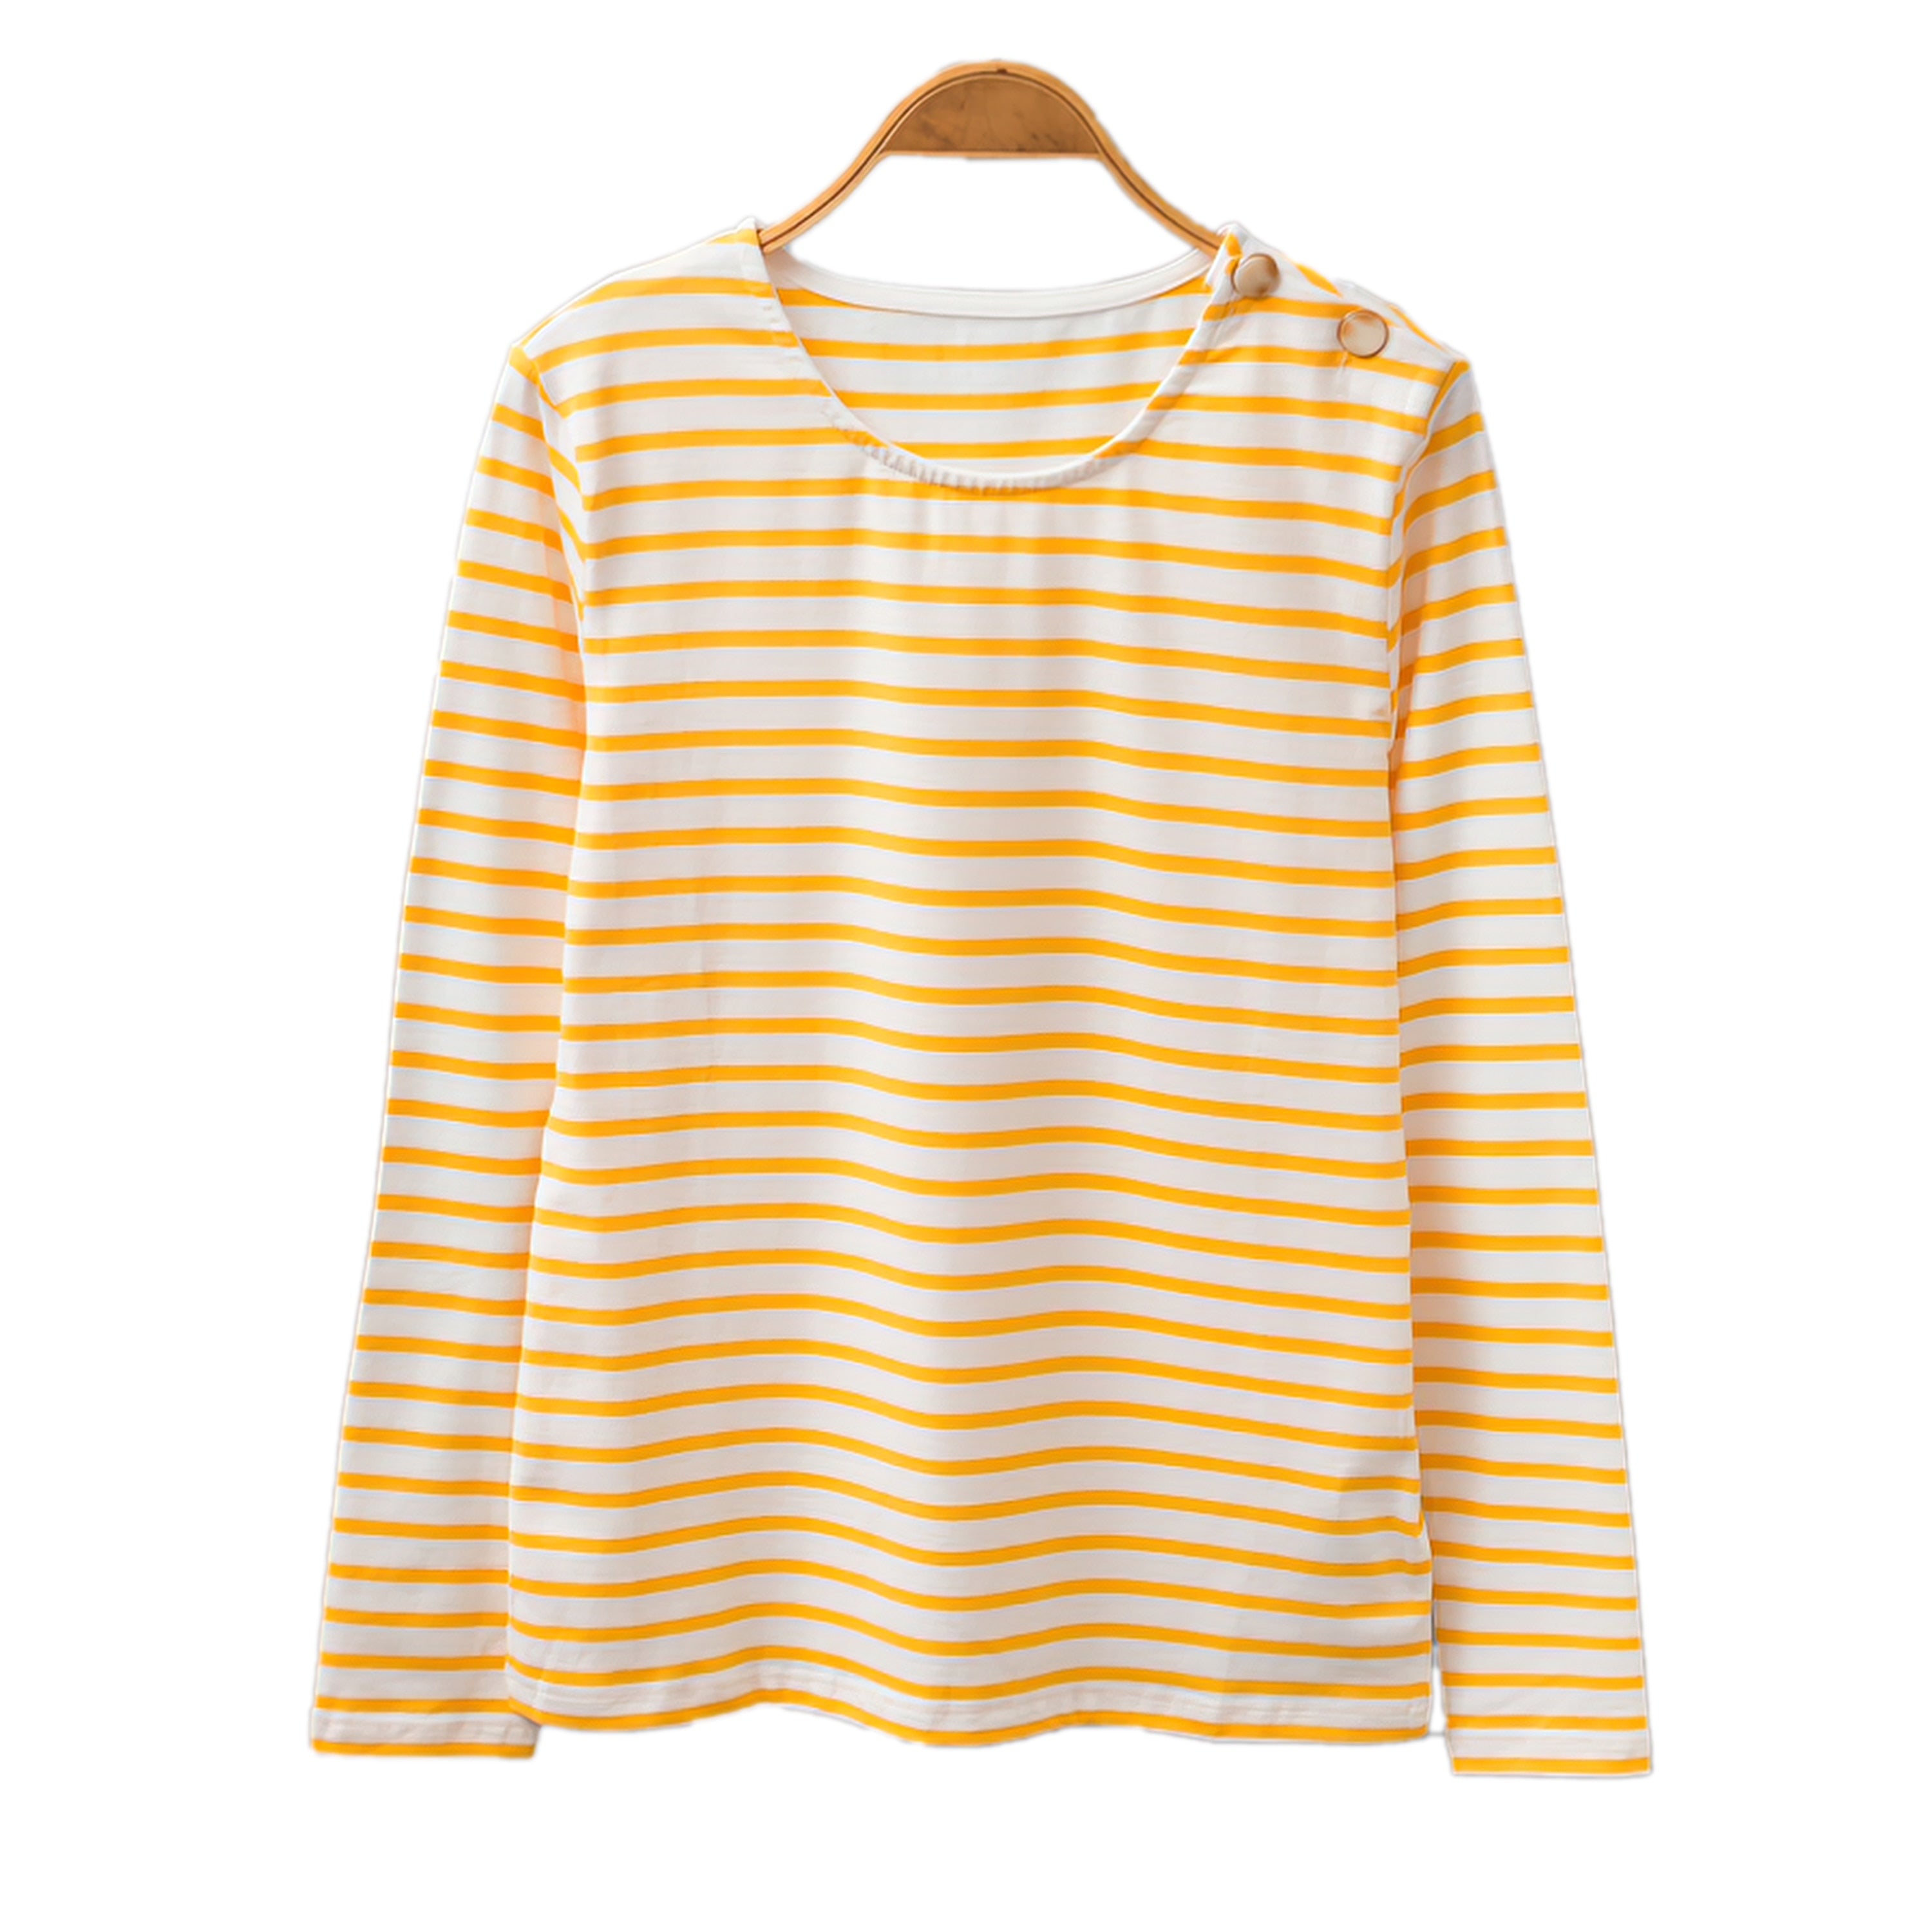 Clacive Classic Striped Women's T-Shirt  Autumn Niche Retro Sea Soul Shirt Round Neck Button Yellow Loose Long-Sleeved Tees